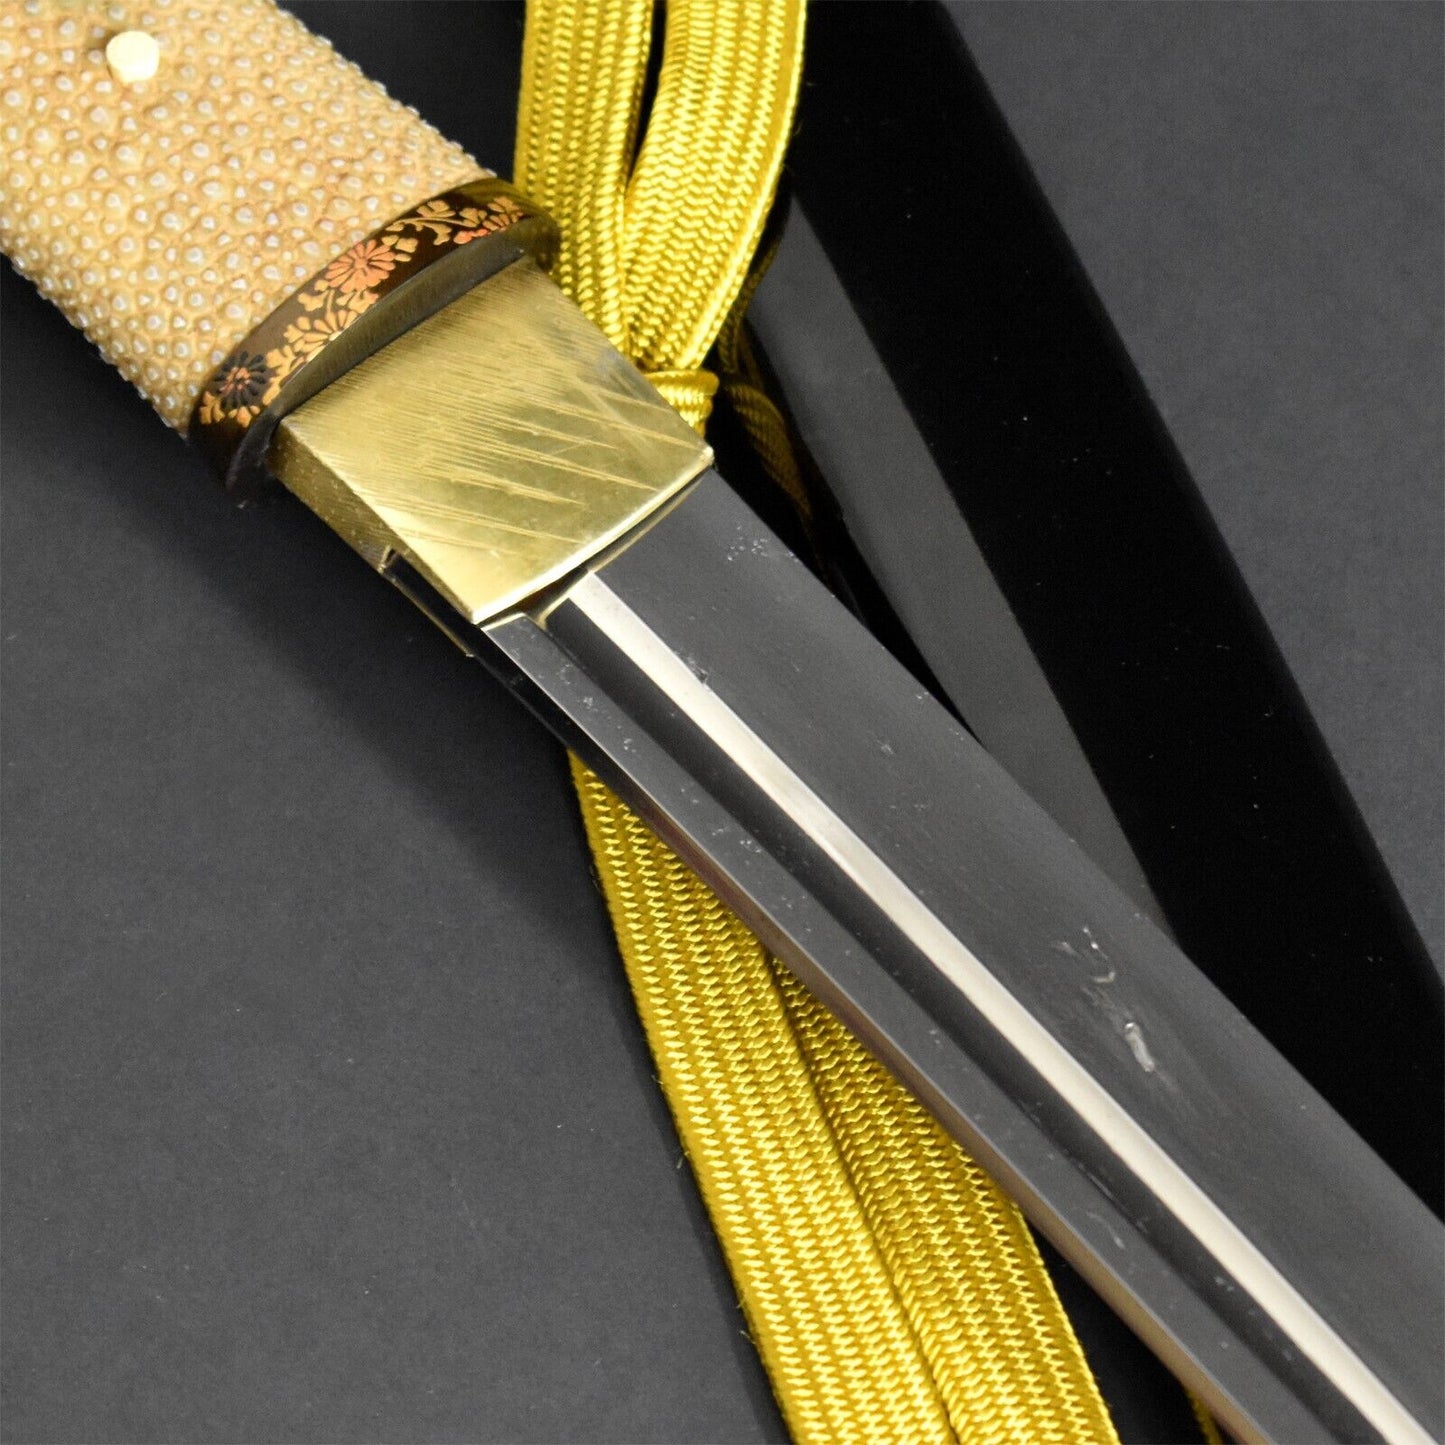 Antique Japanese Wakizashi Kanesaki Signed Samurai Sword Collectible Weapon Tamahagane Steel Muromachi.